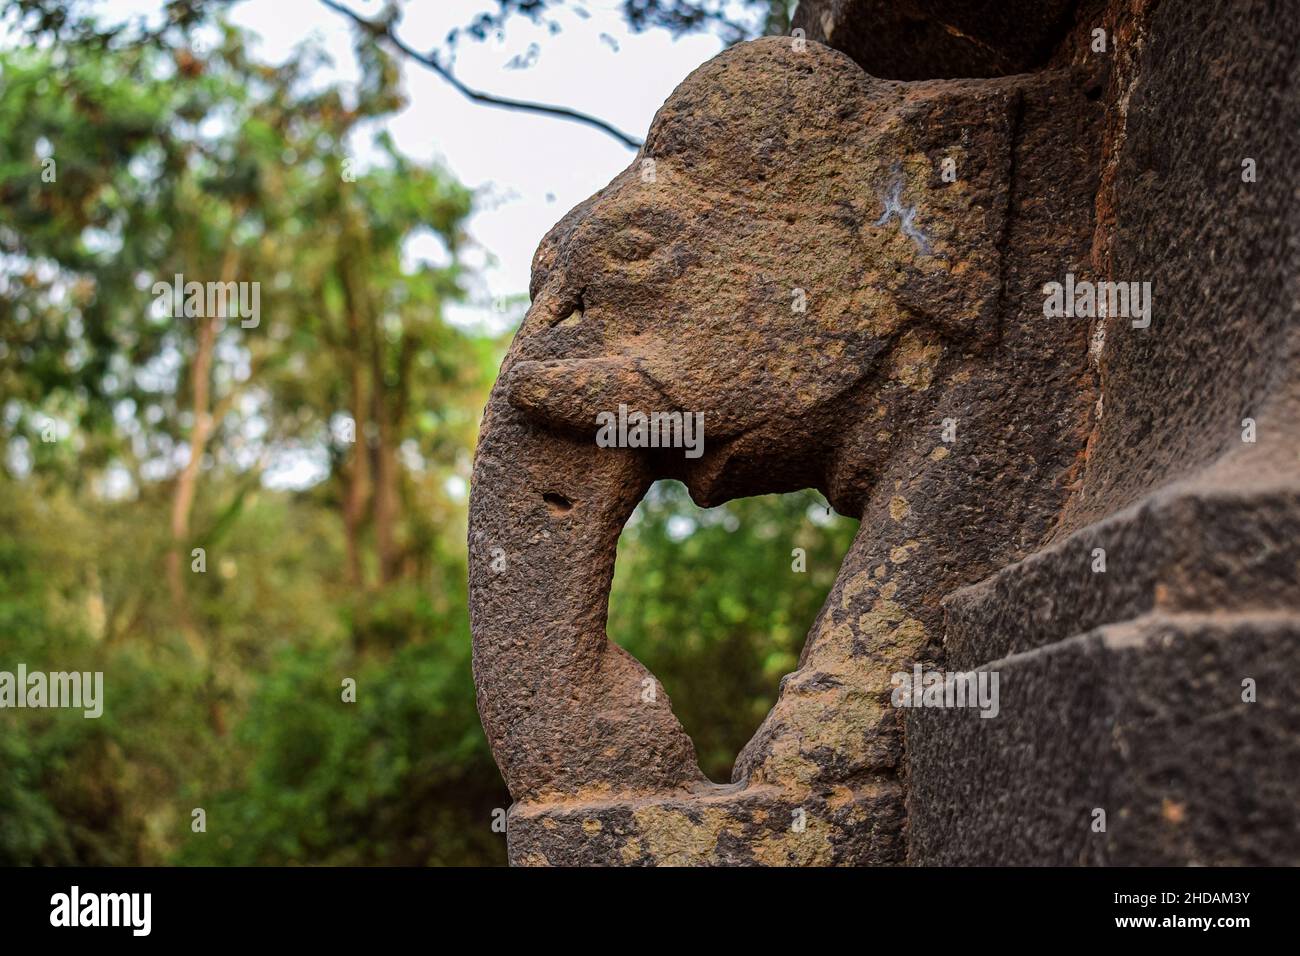 Stock Foto von alten geschnitzten Elefantenstatue oder Elefantenskulptur in alten hindu-Tempel in Kolhapur Maharashtra Indien.Tiere in den Wänden eines geschnitzten Stockfoto